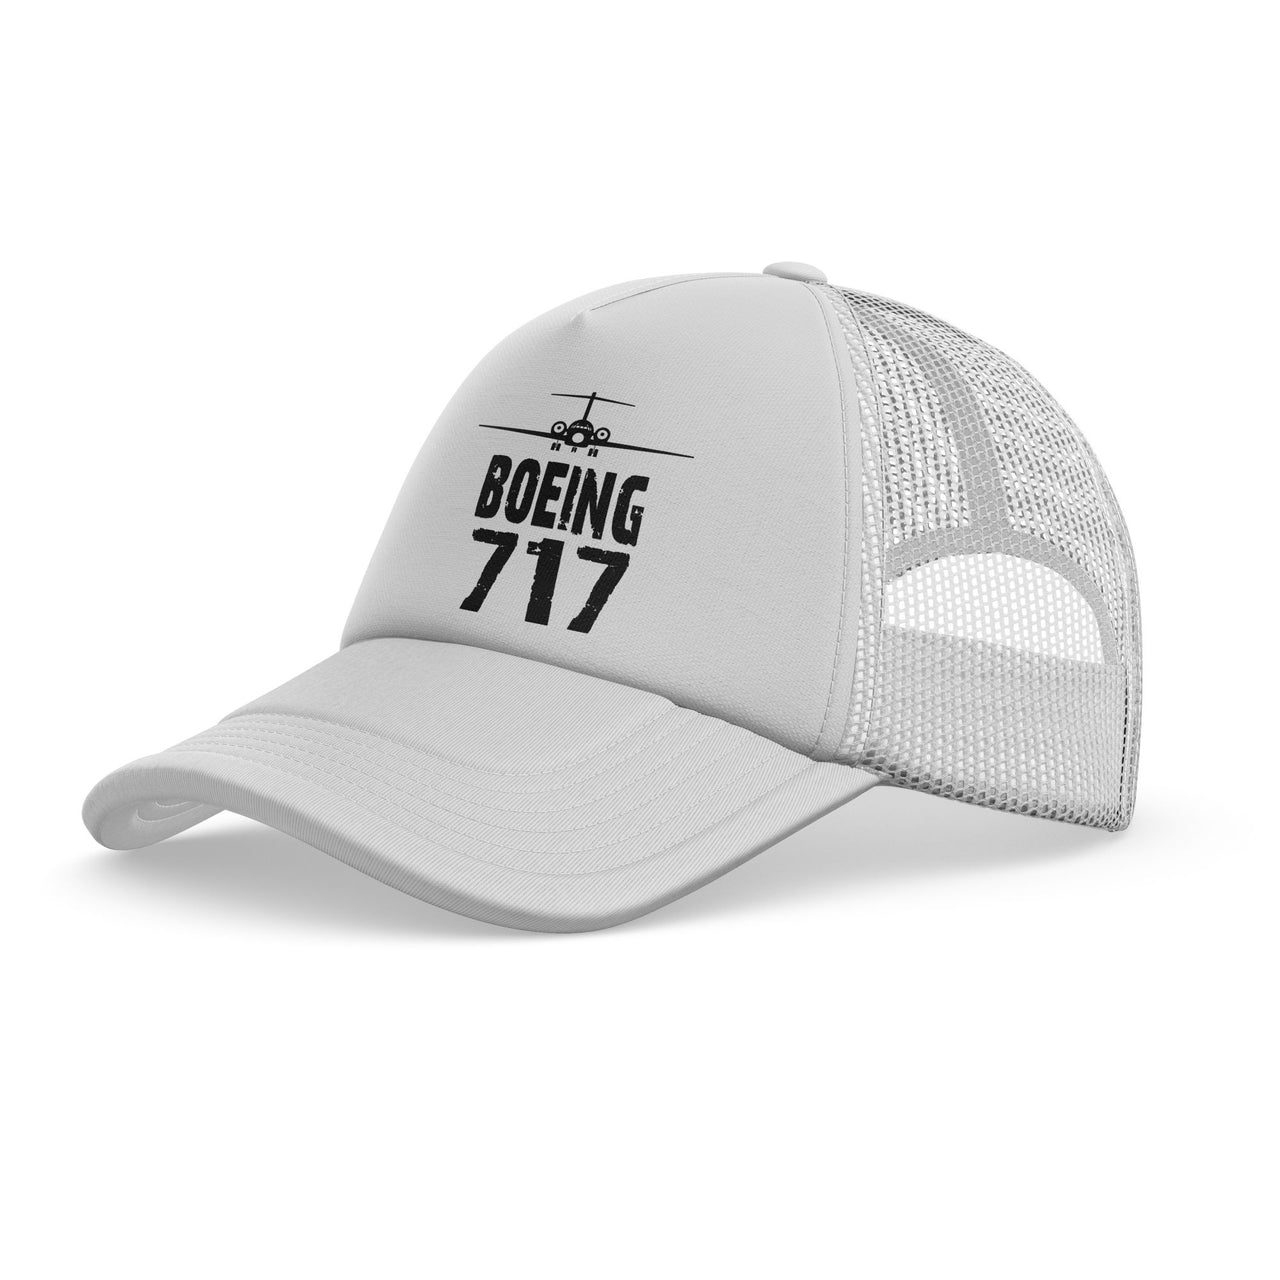 Boeing 717 & Plane Designed Trucker Caps & Hats